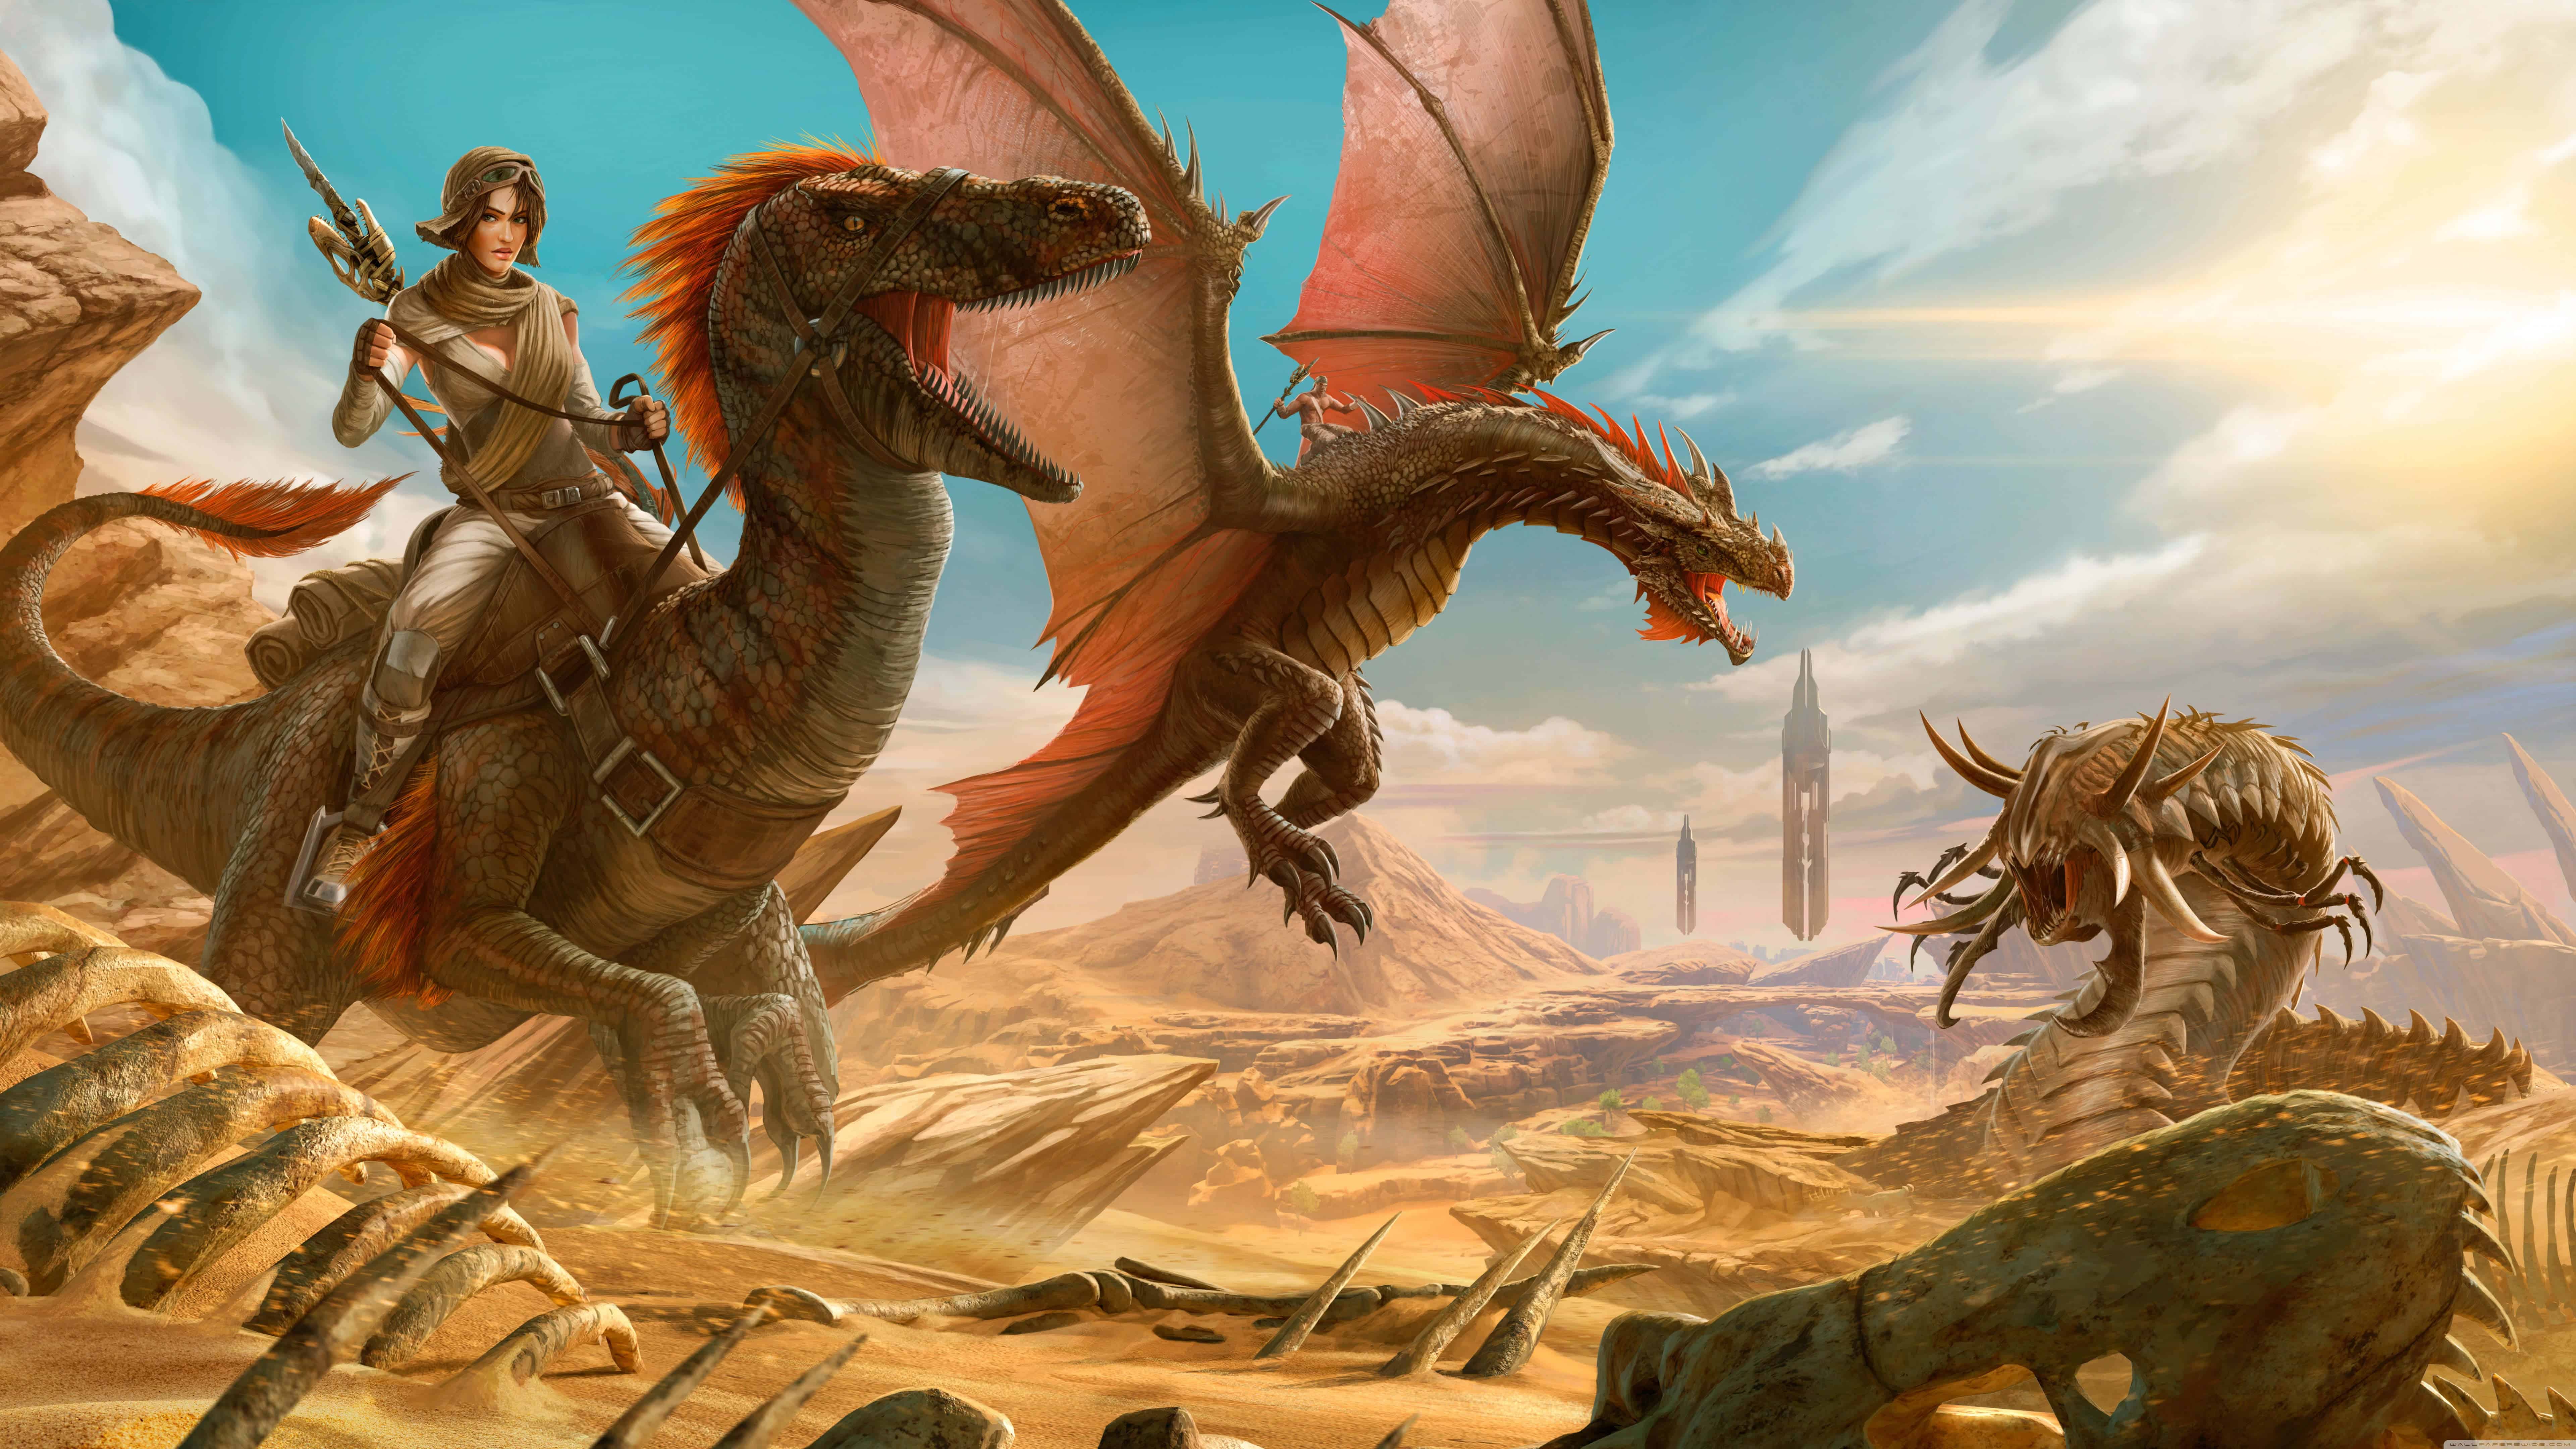 ark wallpaper,dragon,cg artwork,mythology,fictional character,mythical creature